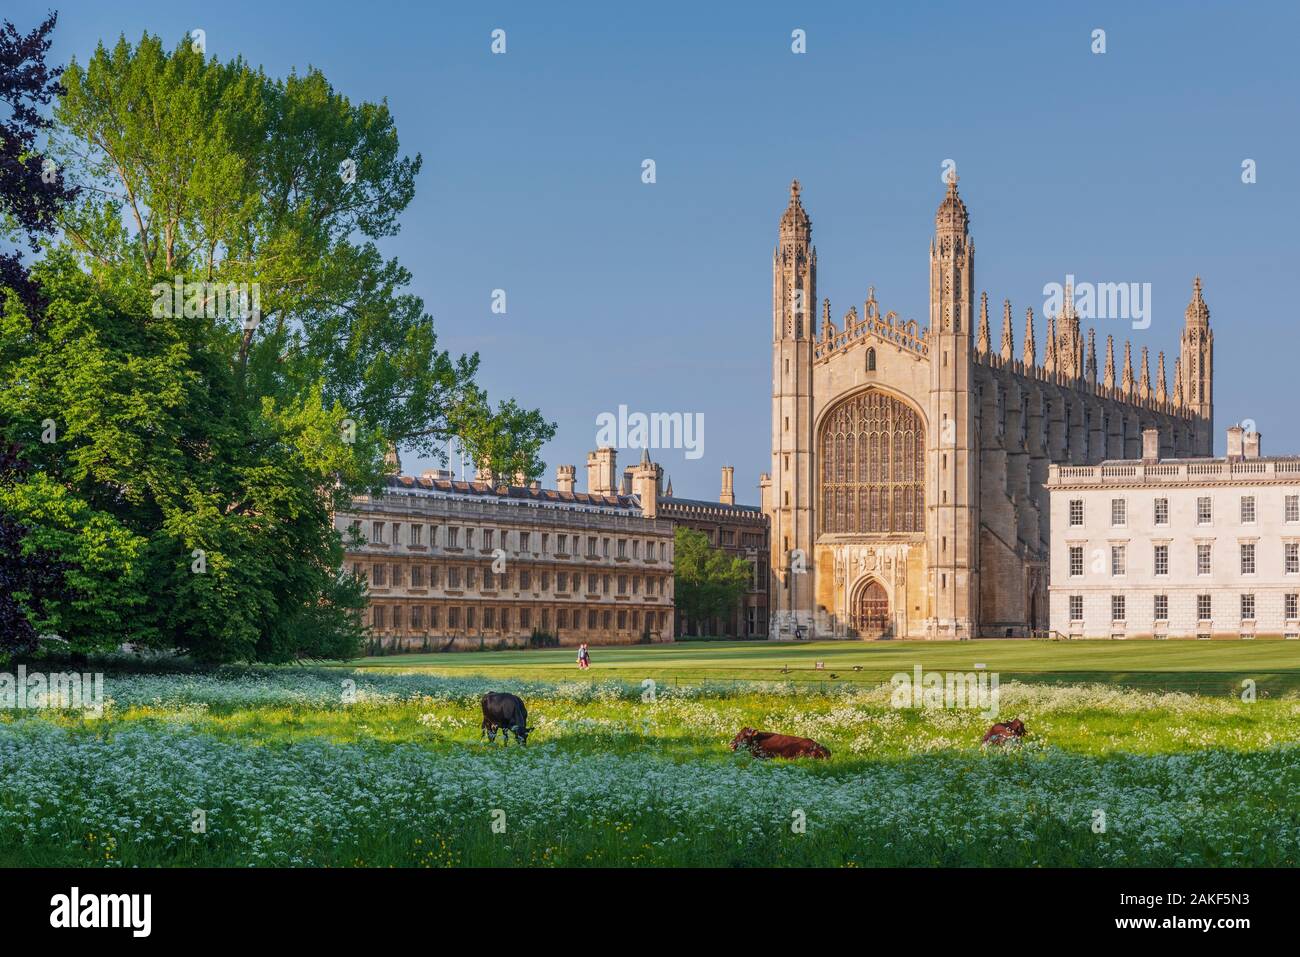 UK, England, Cambridgeshire, Cambridge, The Backs, King's College, King's College Chapel, Cattle grazing Stock Photo